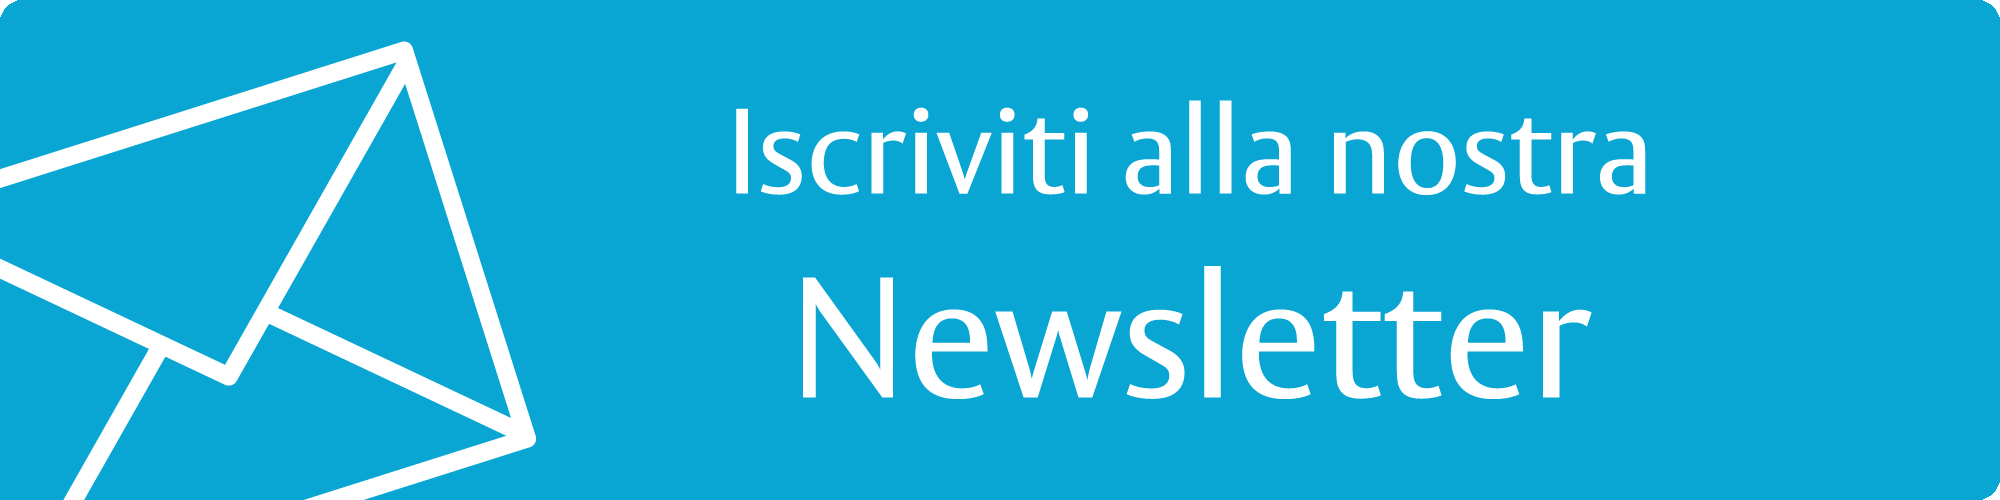 tl_files/archivi_biblioteca/denis/iscriviti-alla-nostra-newsletter.png